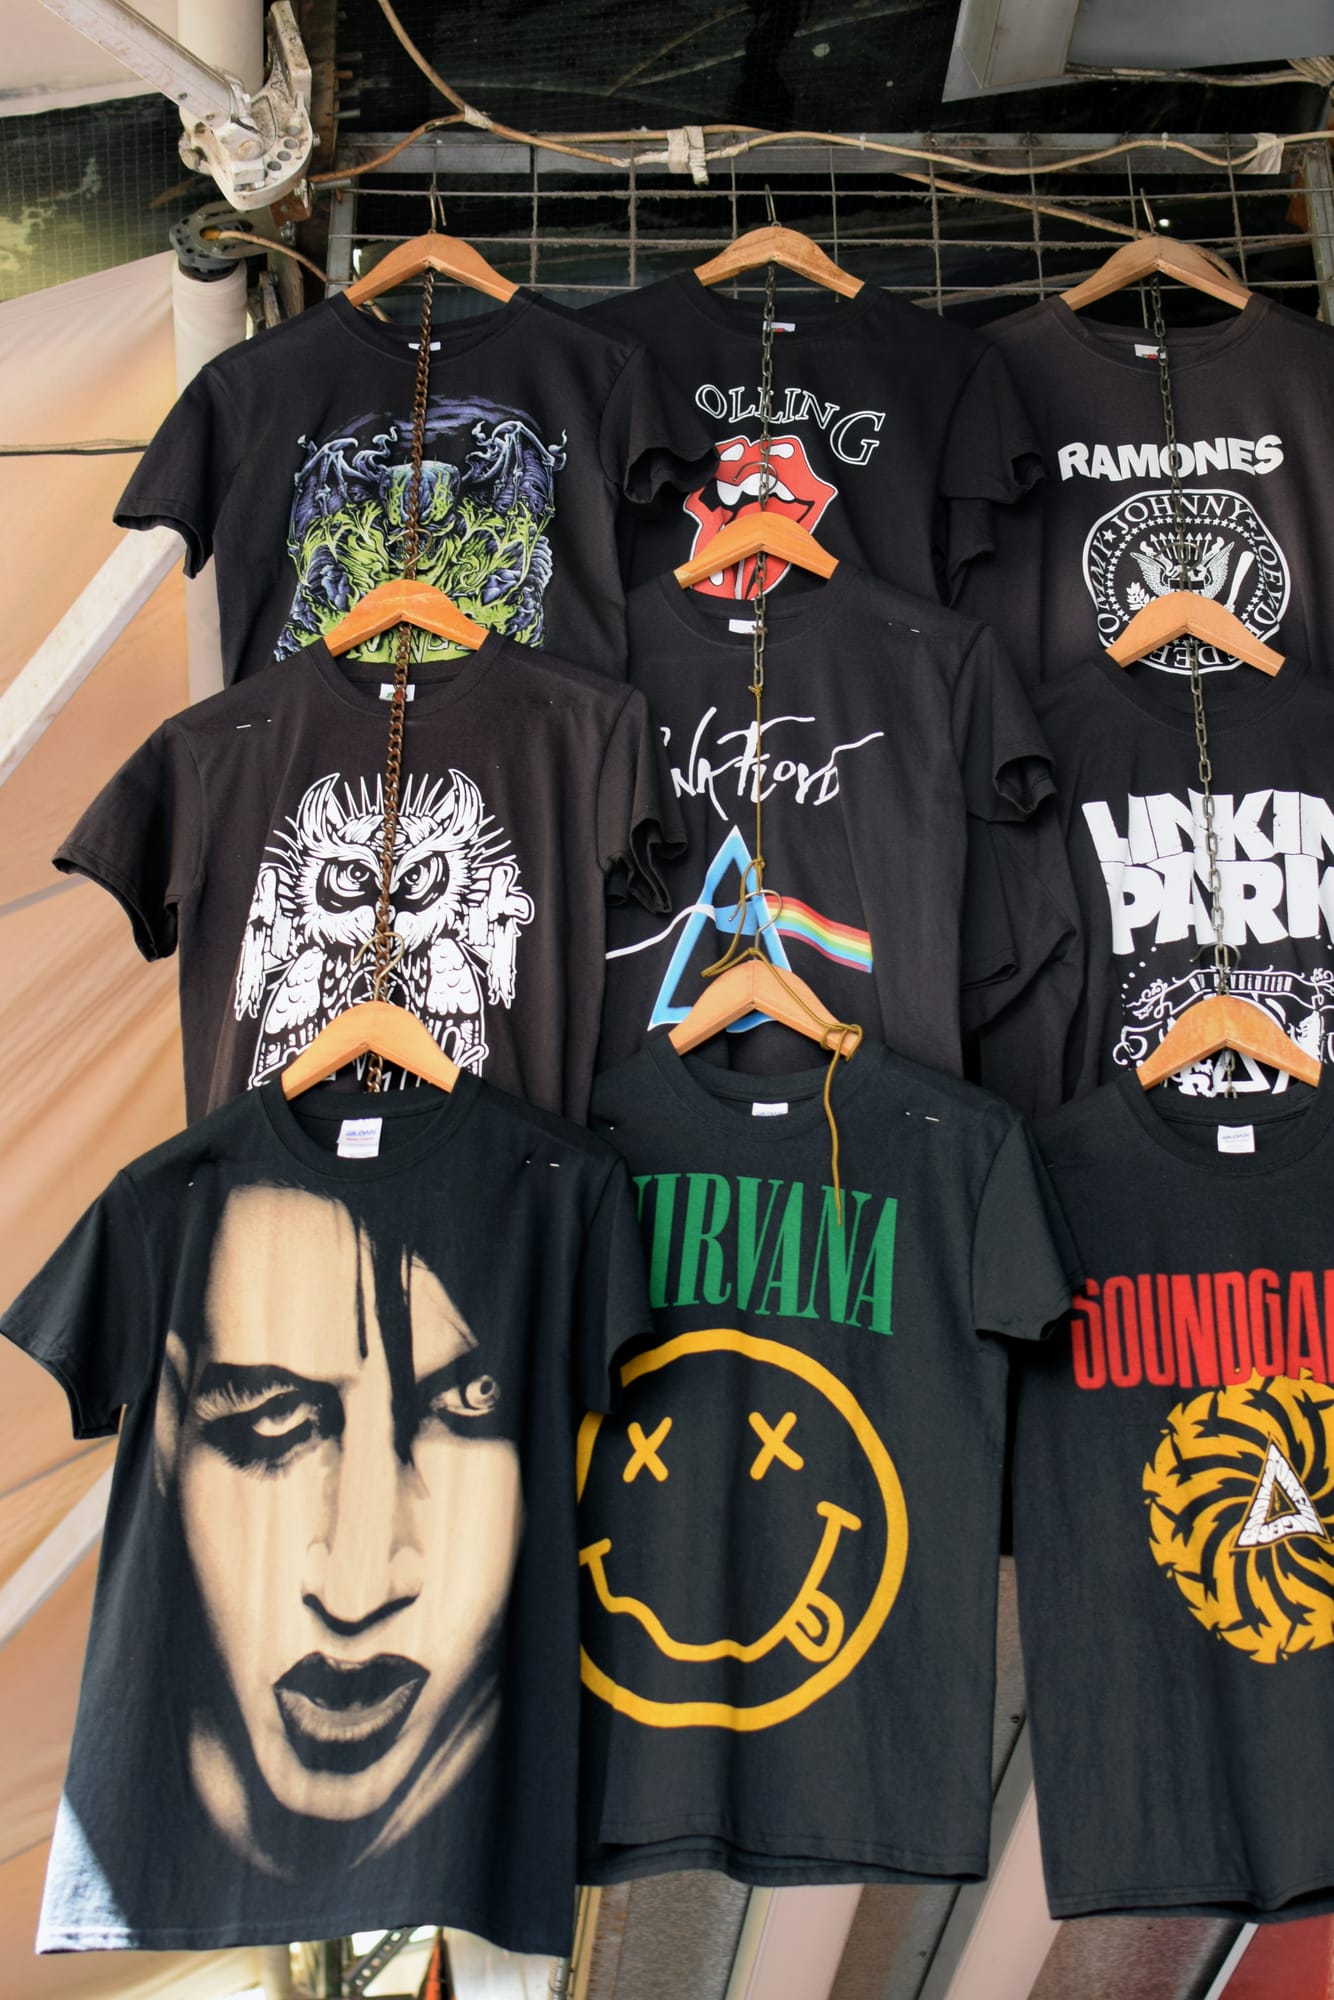 stock-photo-of-rock-band-t-shirts